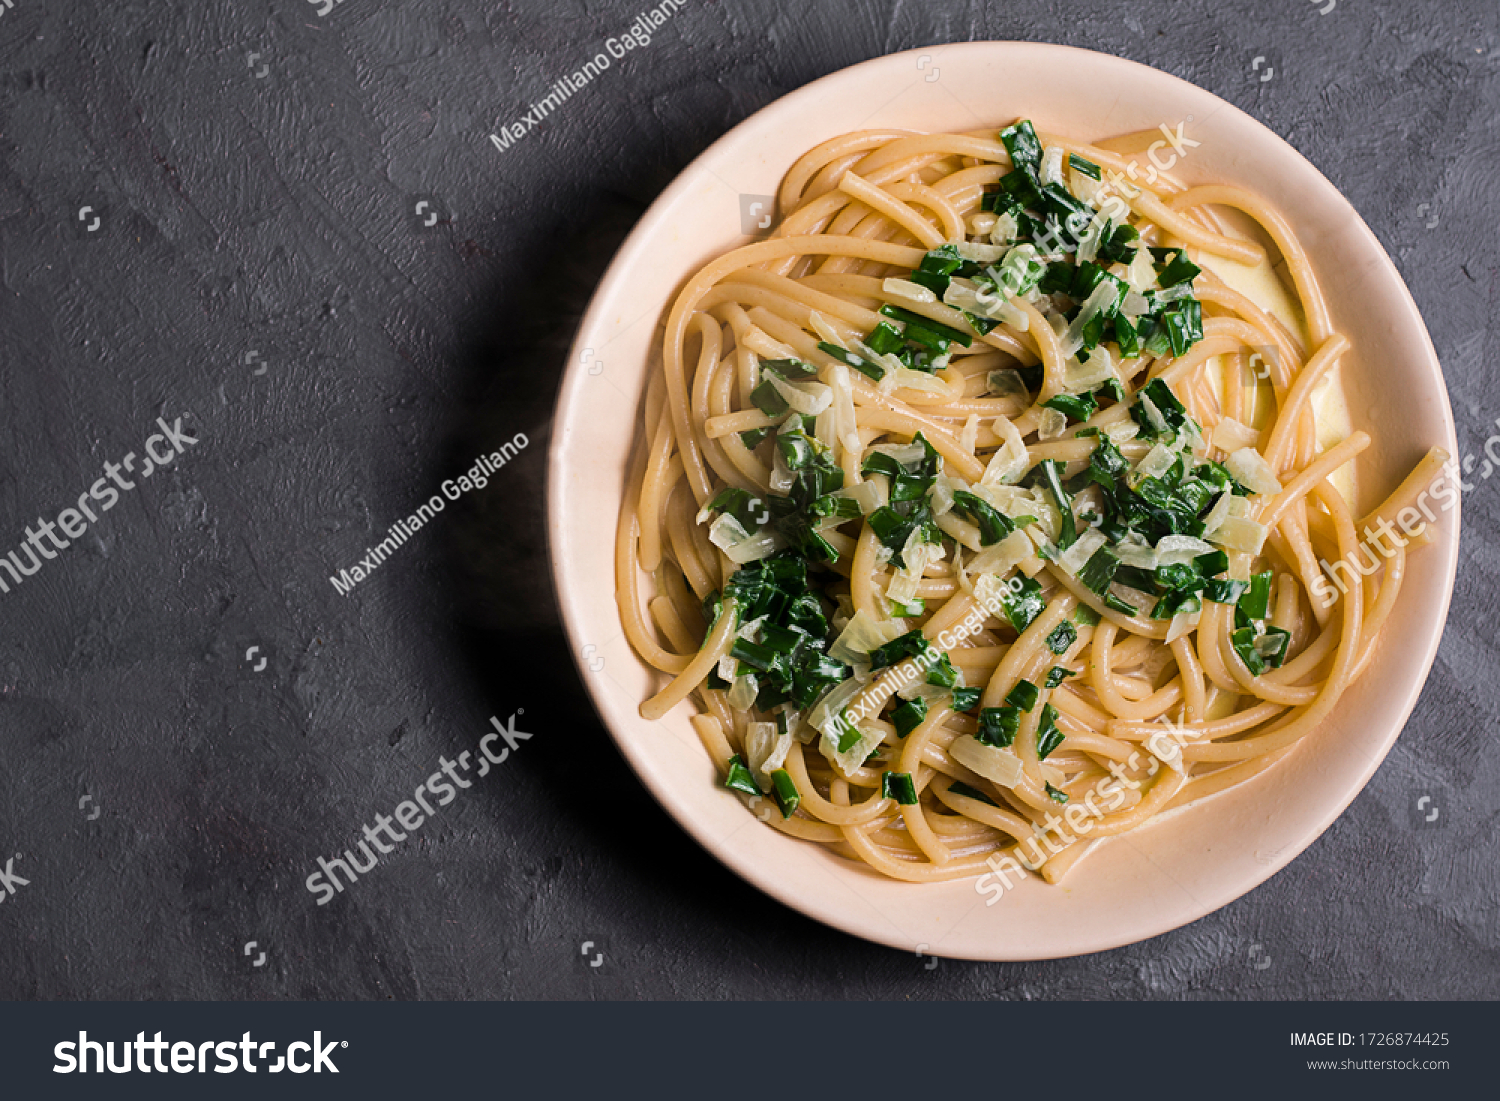 10 Pasta welsh onion Images, Stock Photos & Vectors | Shutterstock